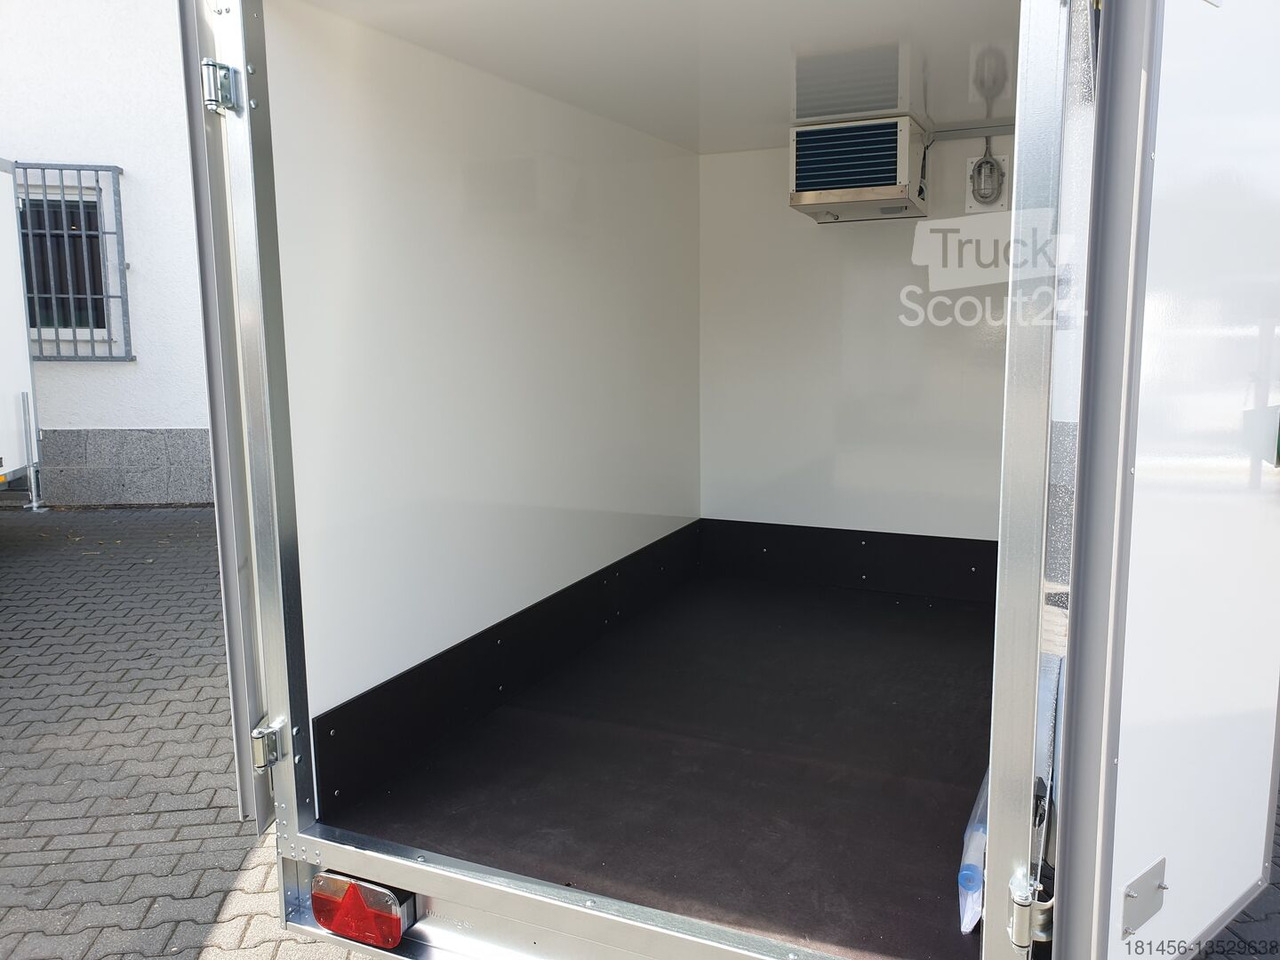 Ny Kjølehenger mobile Kühlzelle 60mm isoliert mit Standstützen 230Volt Govi Kühlung direkt verfügbar Neu: bilde 4